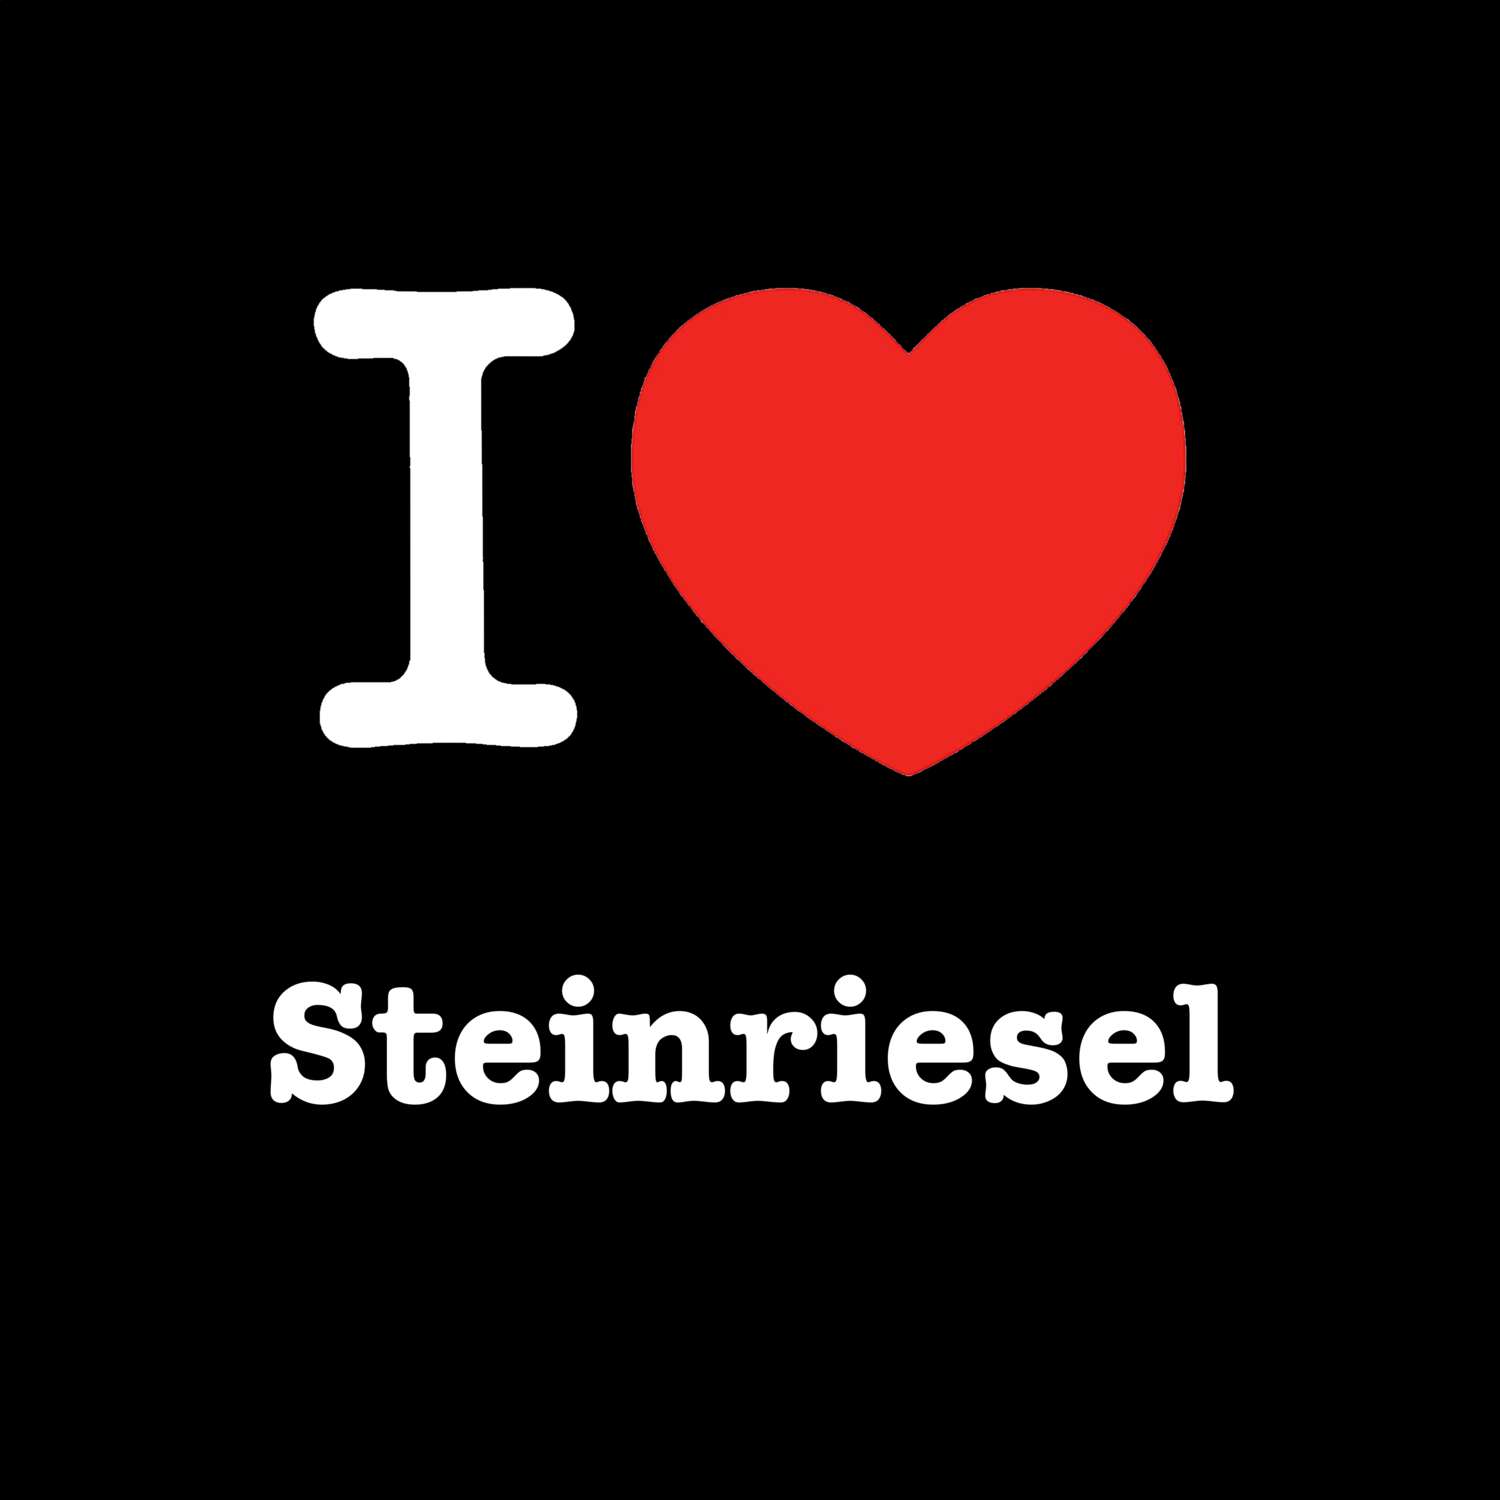 Steinriesel T-Shirt »I love«